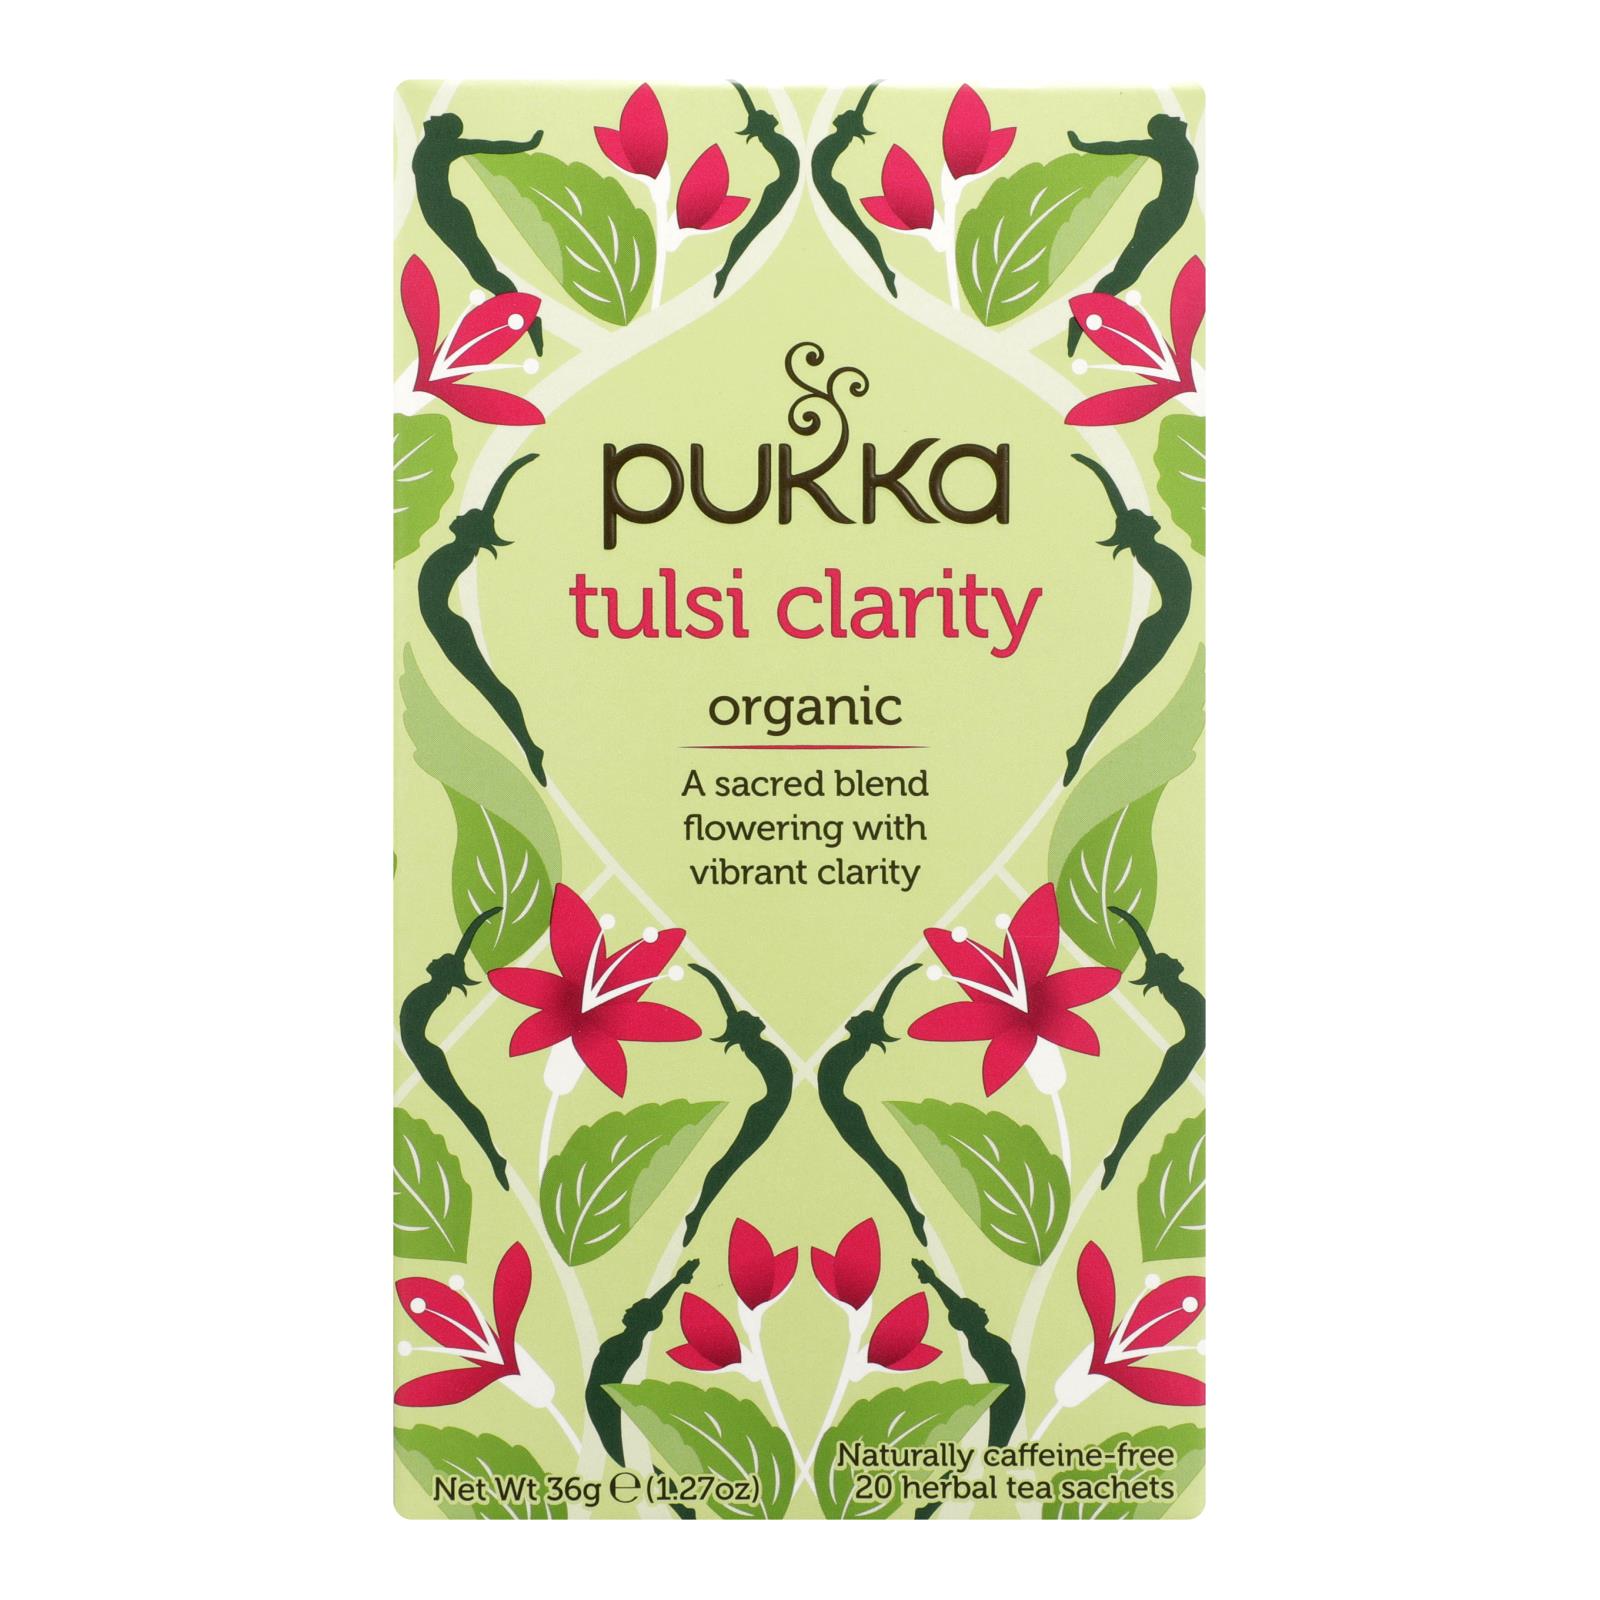 Pukka Herbal Teas - Tea Tulsi Clarity - 6개 묶음상품 - 20 CT